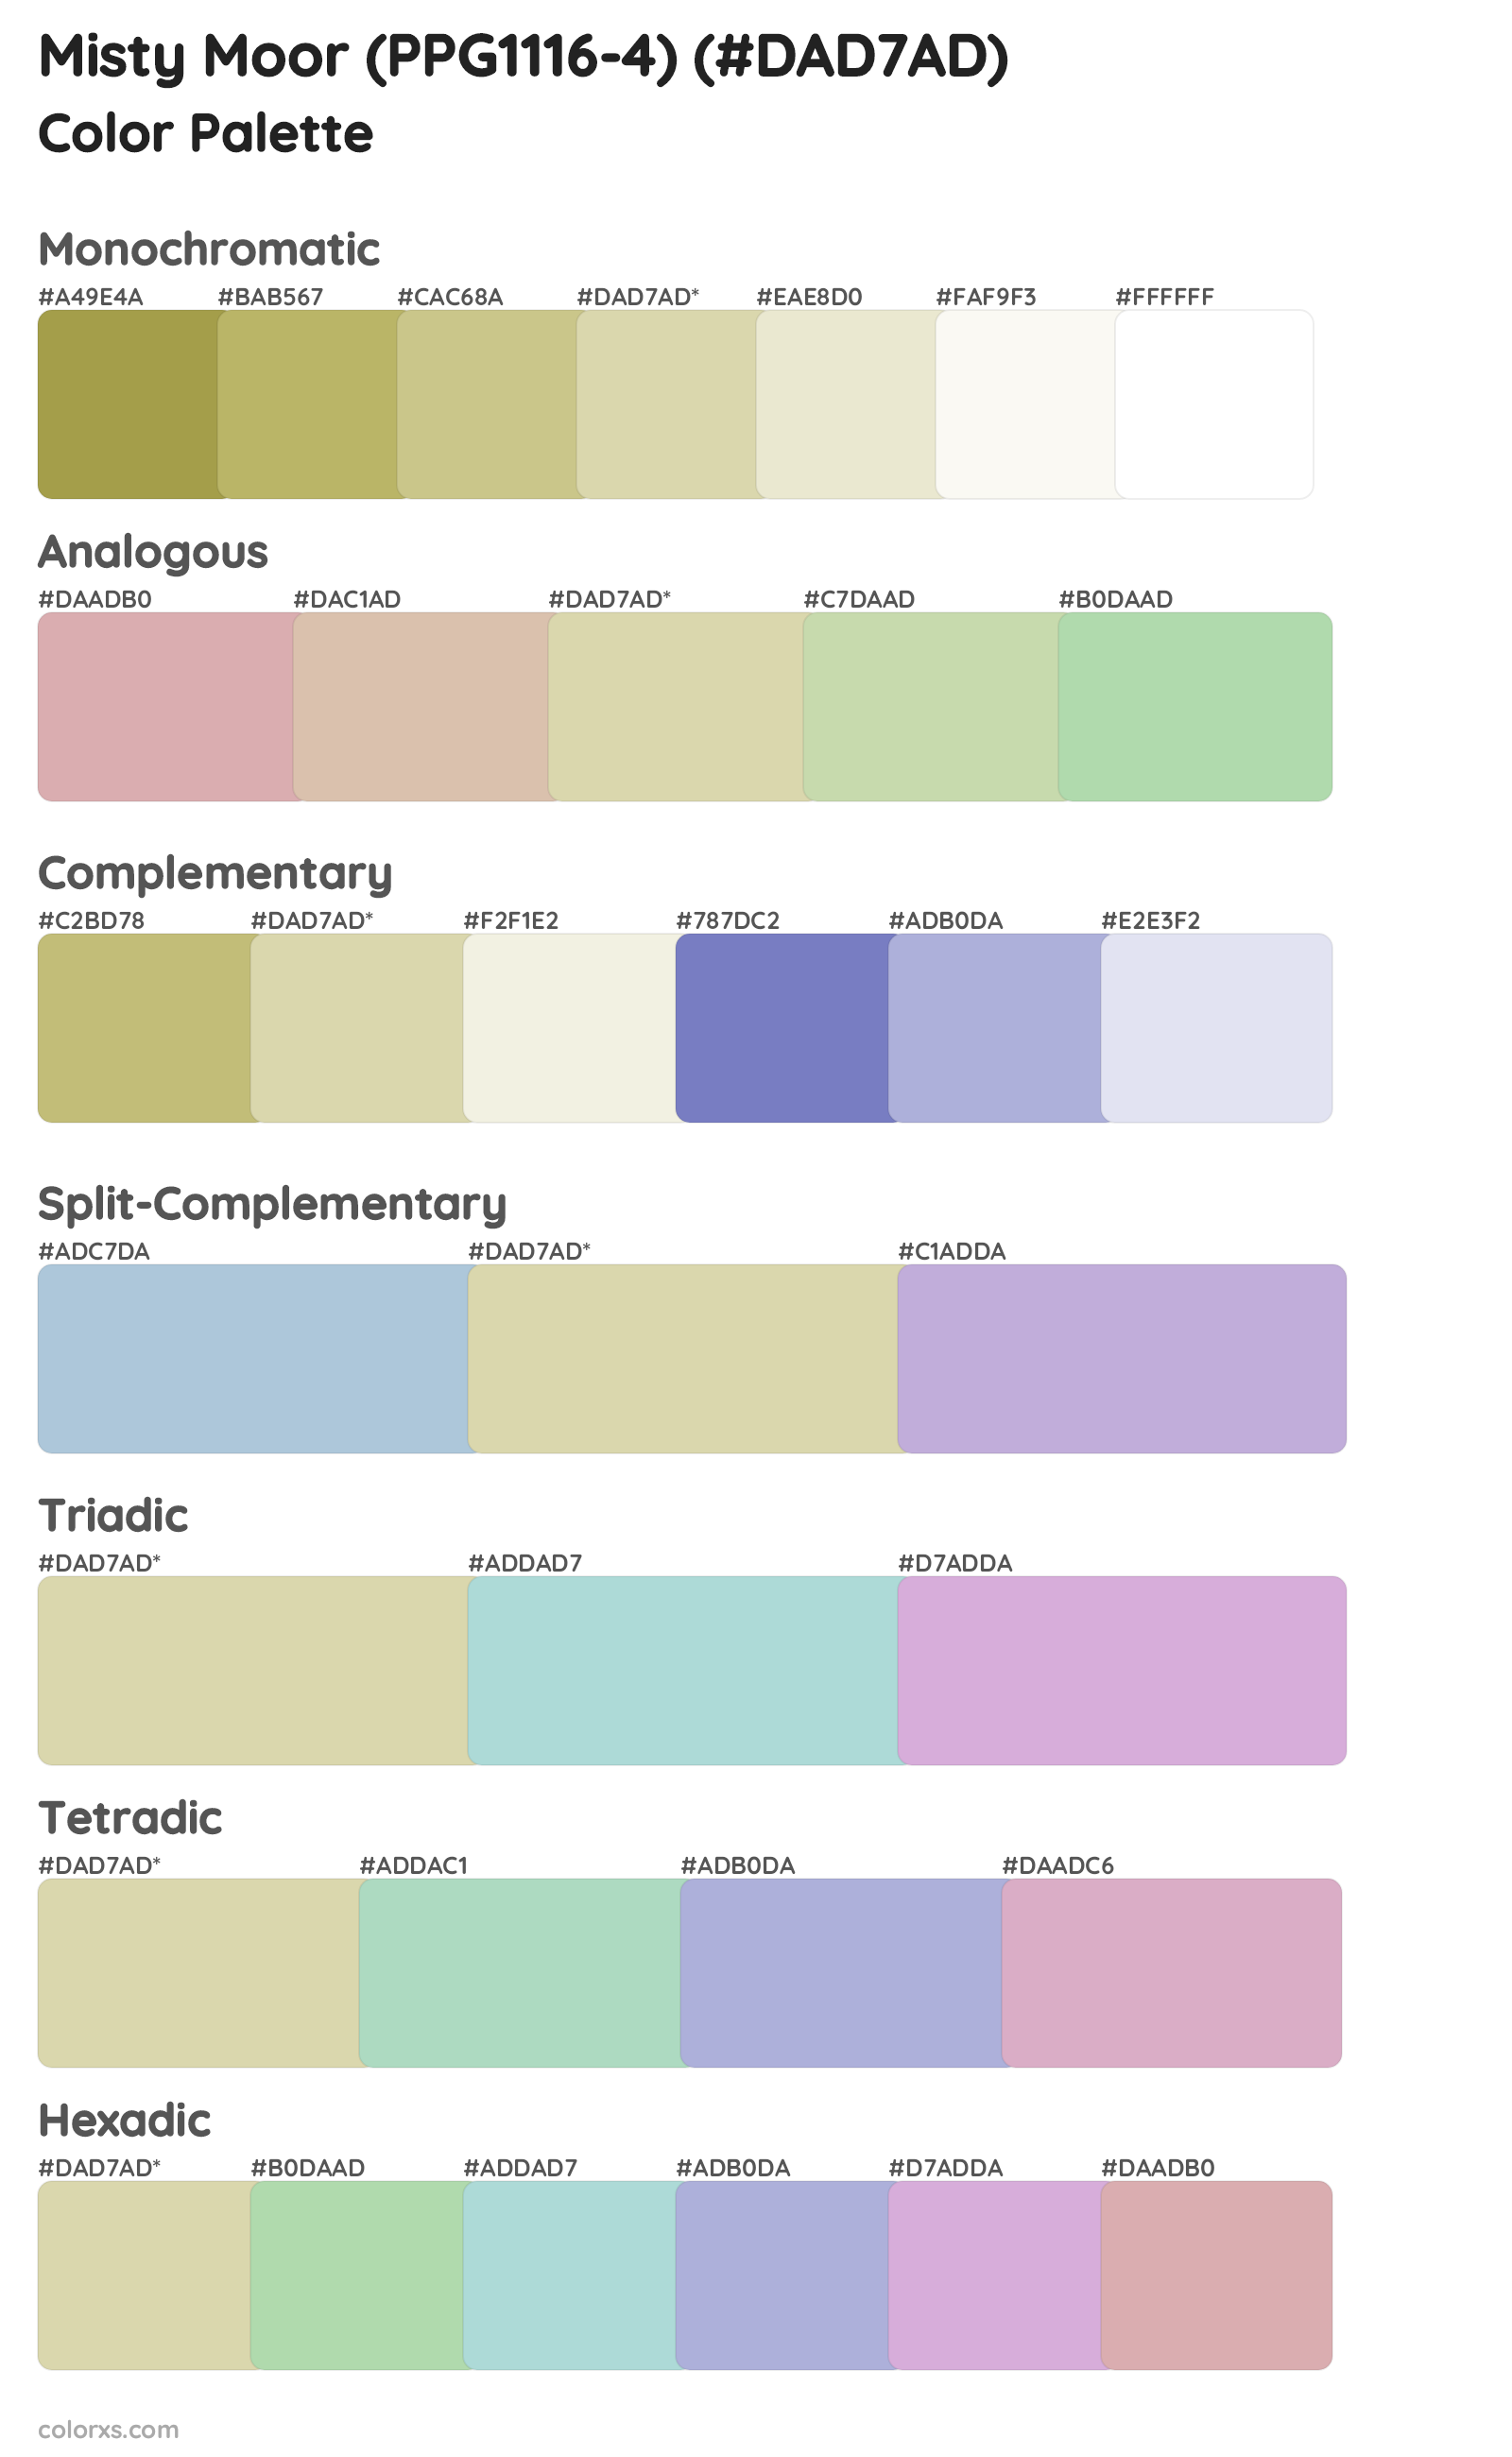 Misty Moor (PPG1116-4) Color Scheme Palettes